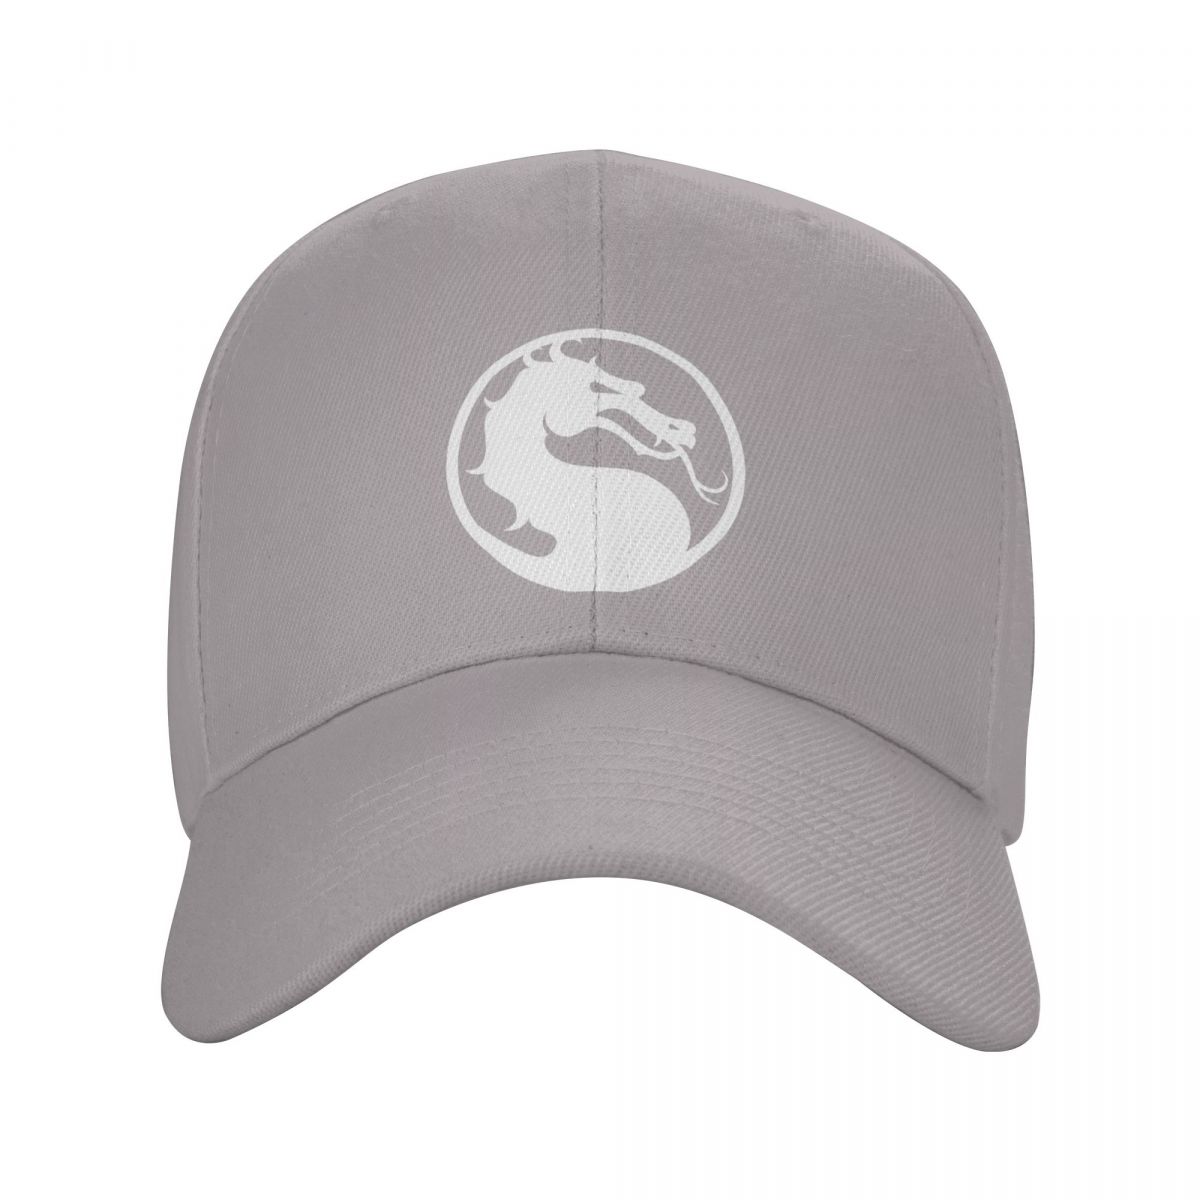 Mortal Kombat - Snapback Baseball Cap - Summer Hat For Men and Women-Gray-Adjustable Cap-